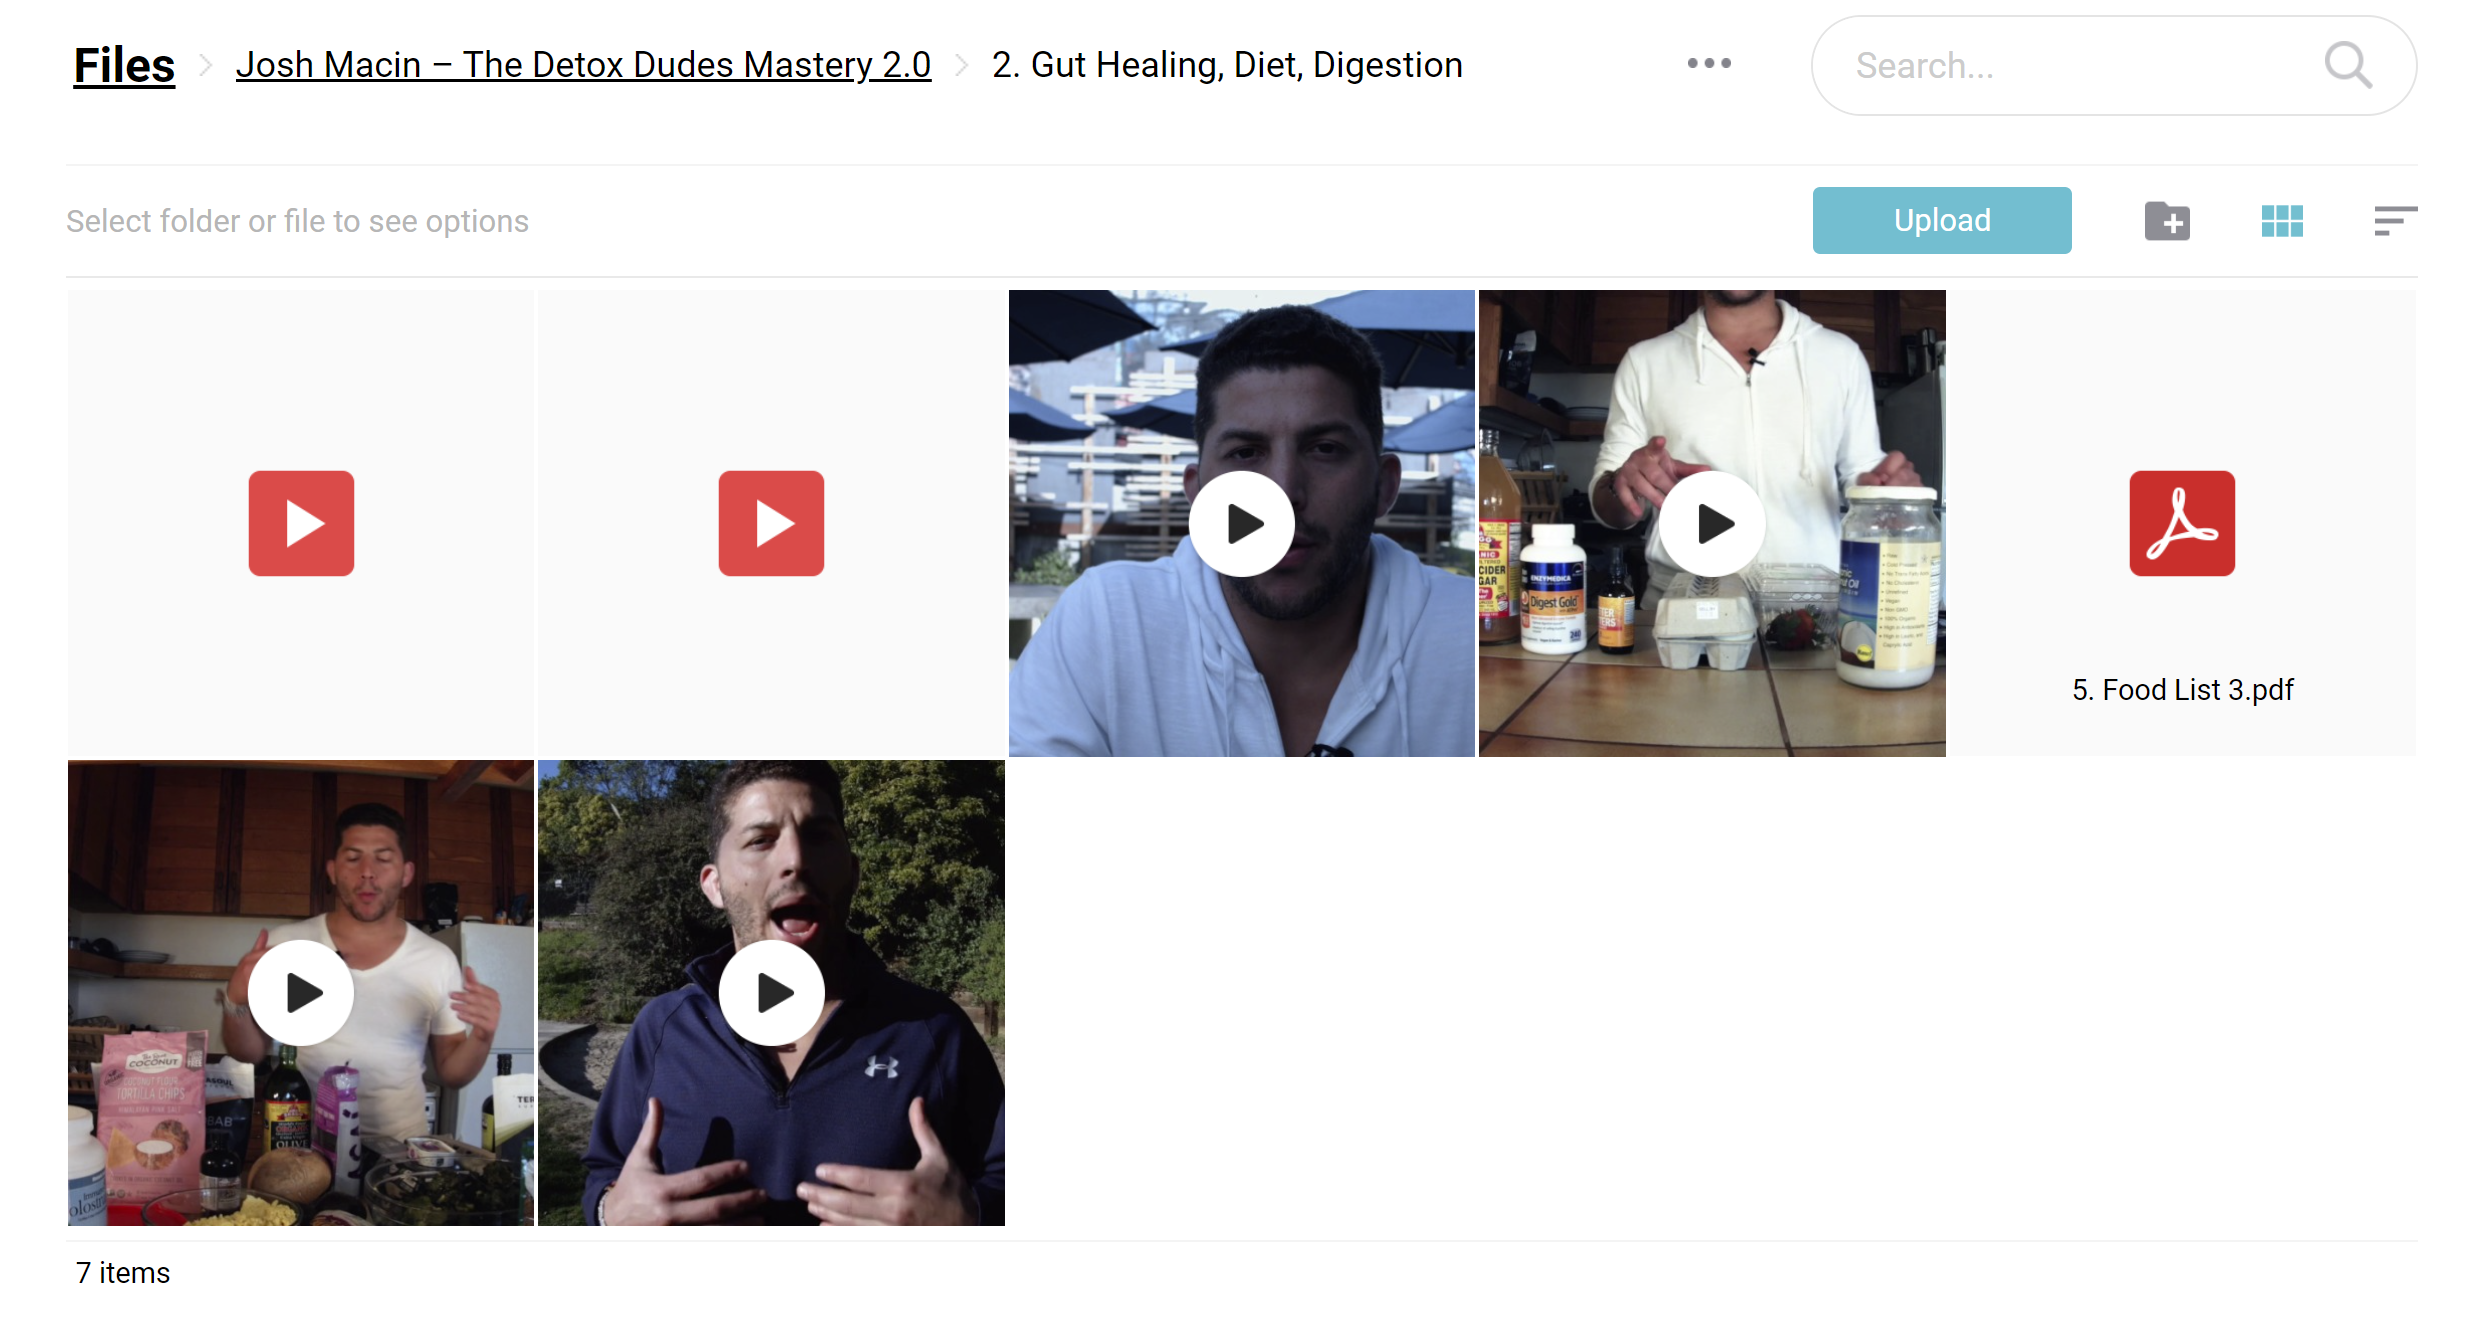 Josh Macin The Detox Dudes Mastery 2.0 Diet